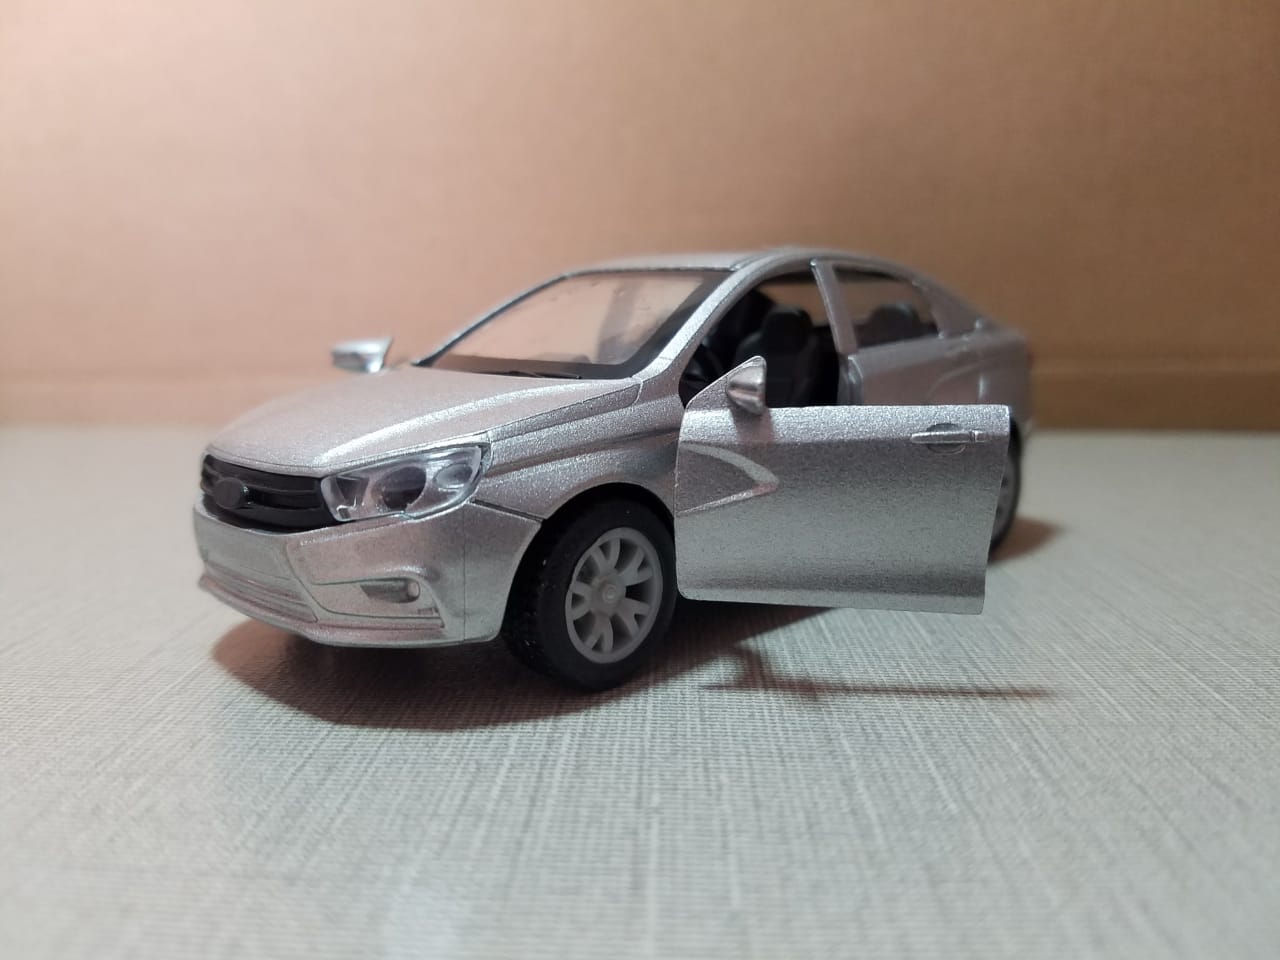 honda city toy car model